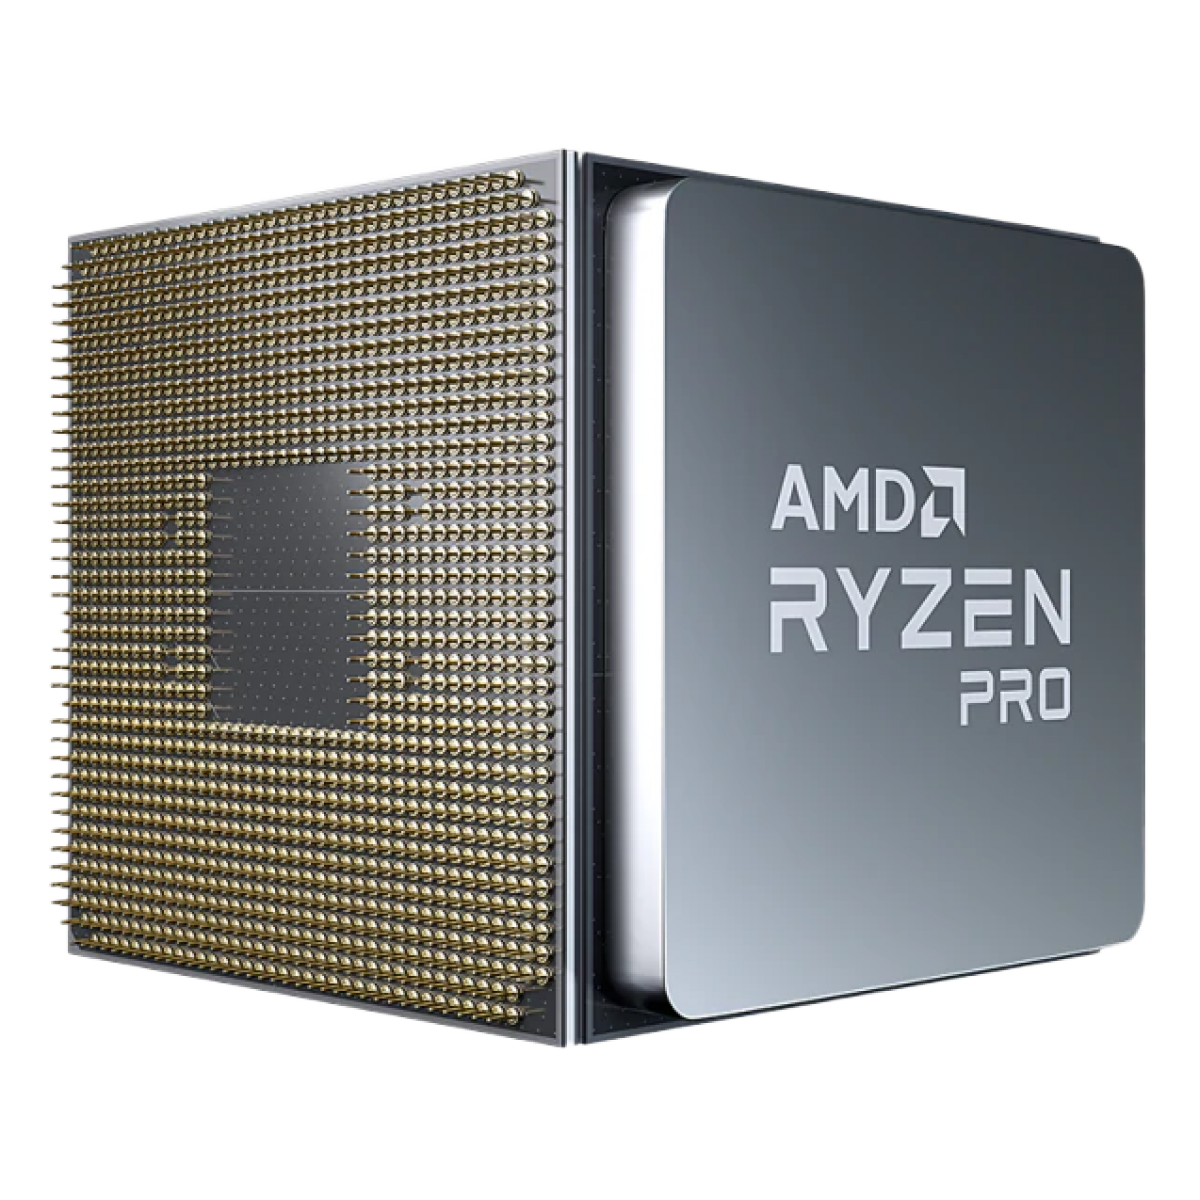 Processador AMD Ryzen 5 PRO 4650G 3.7GHz (4.2GHz Turbo), 6-Cores 12-Threads, AM4, Cooler Wraith Stealth, Com Vídeo Integrado, 100-100000143MPK, TRAY